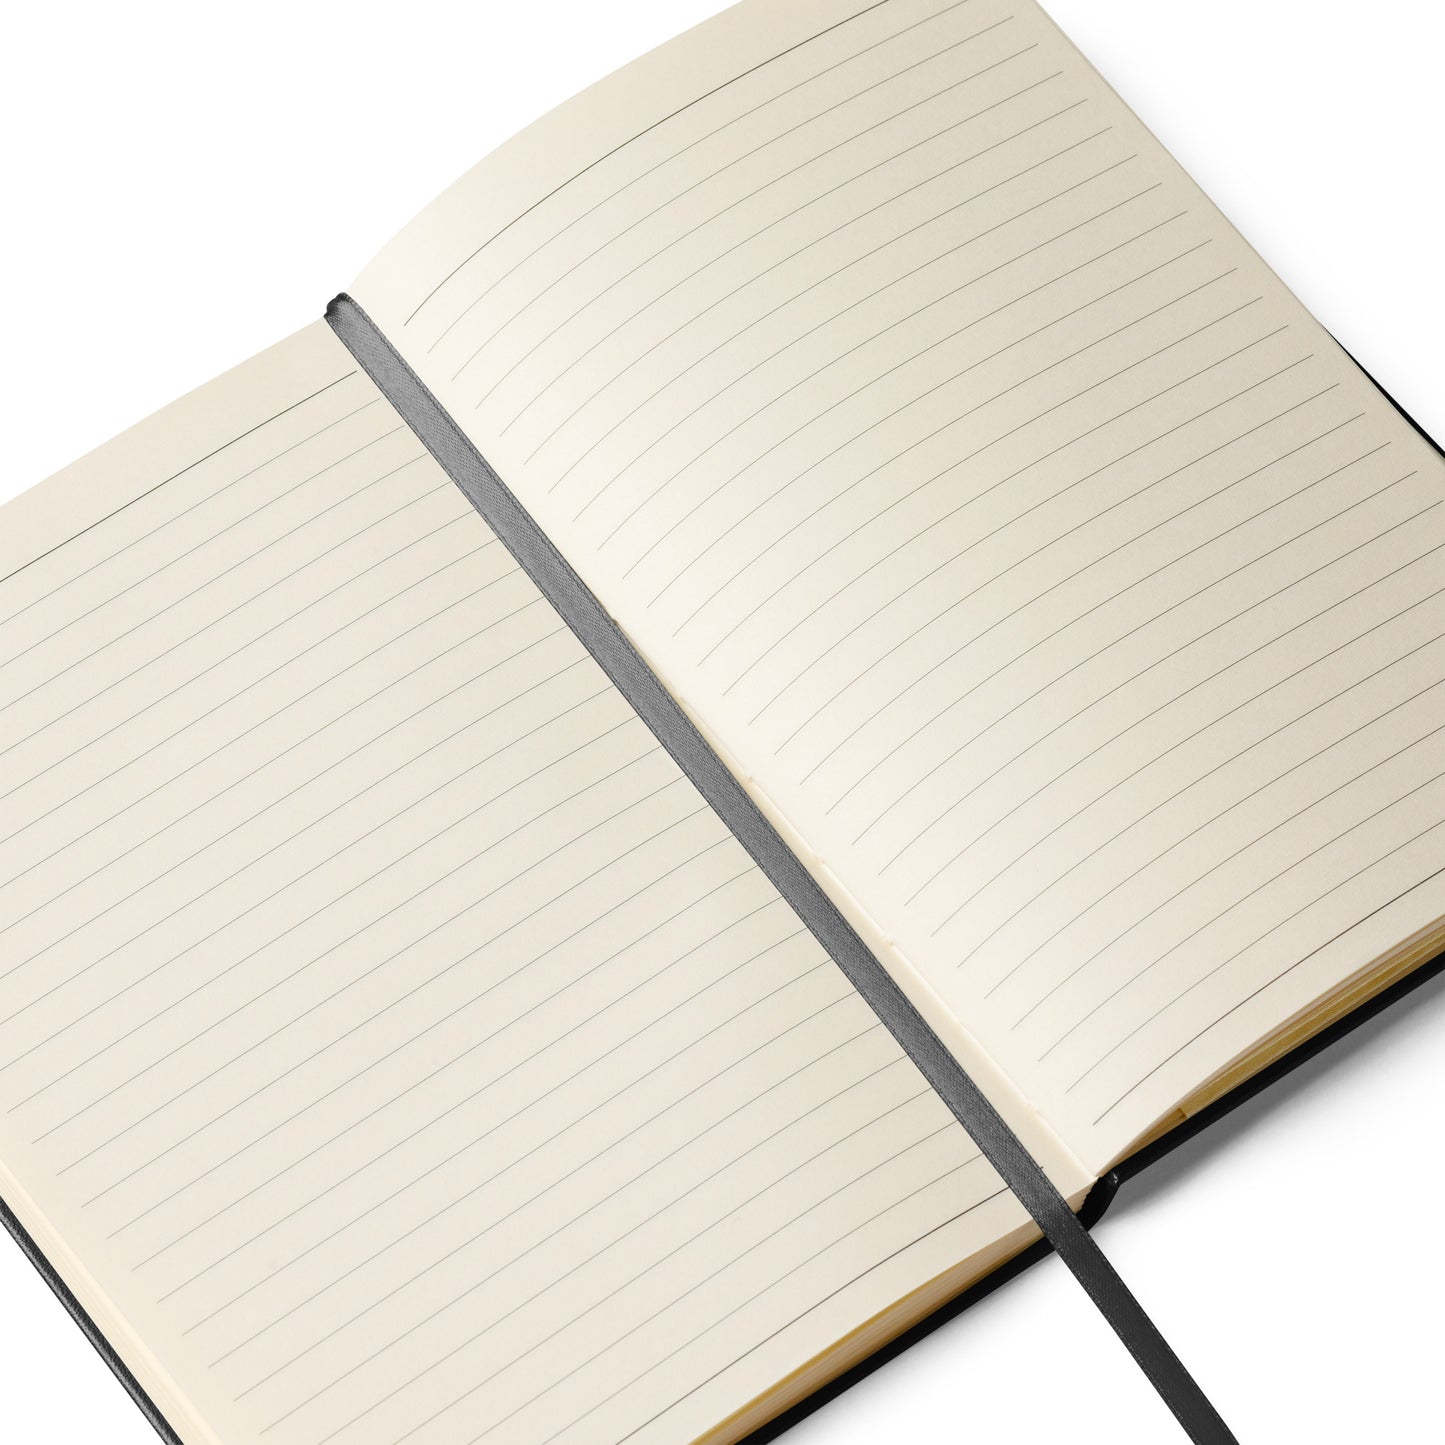 Badlands Hardcover bound notebook (white logo)